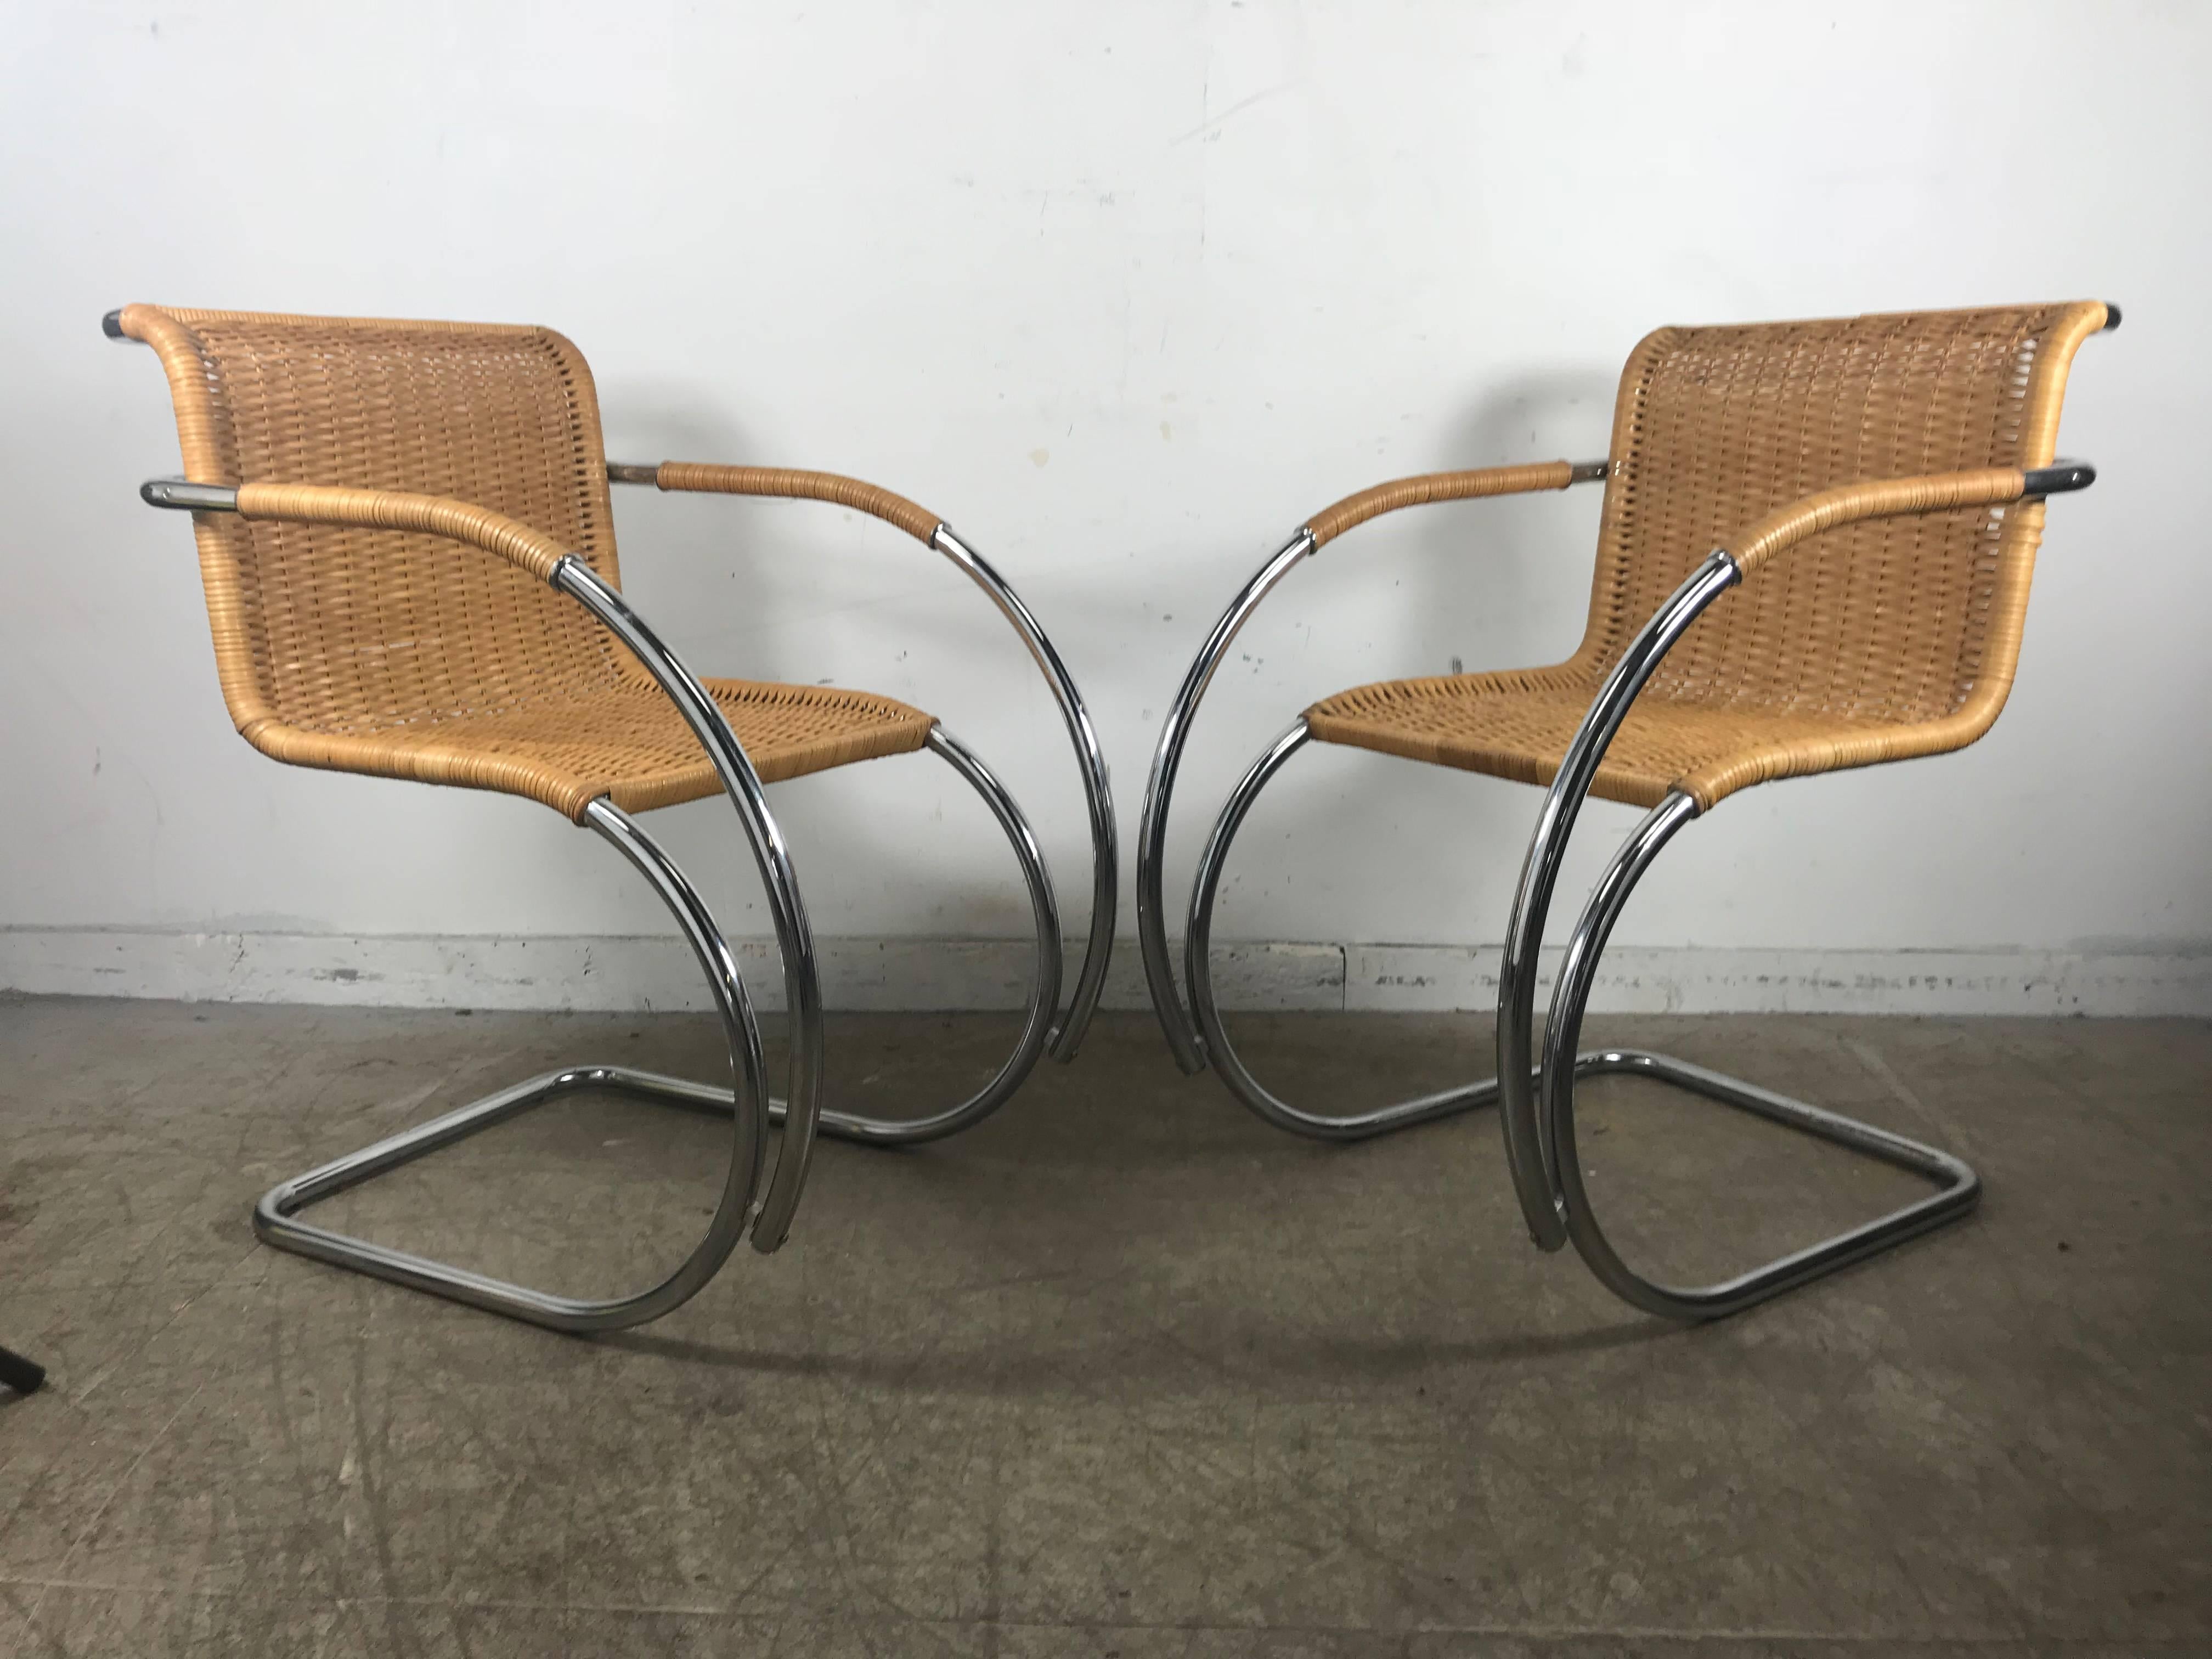 20th Century Pair of Mies van der Rohe Wicker and Chrome MR20 Armchairs, Bauhaus